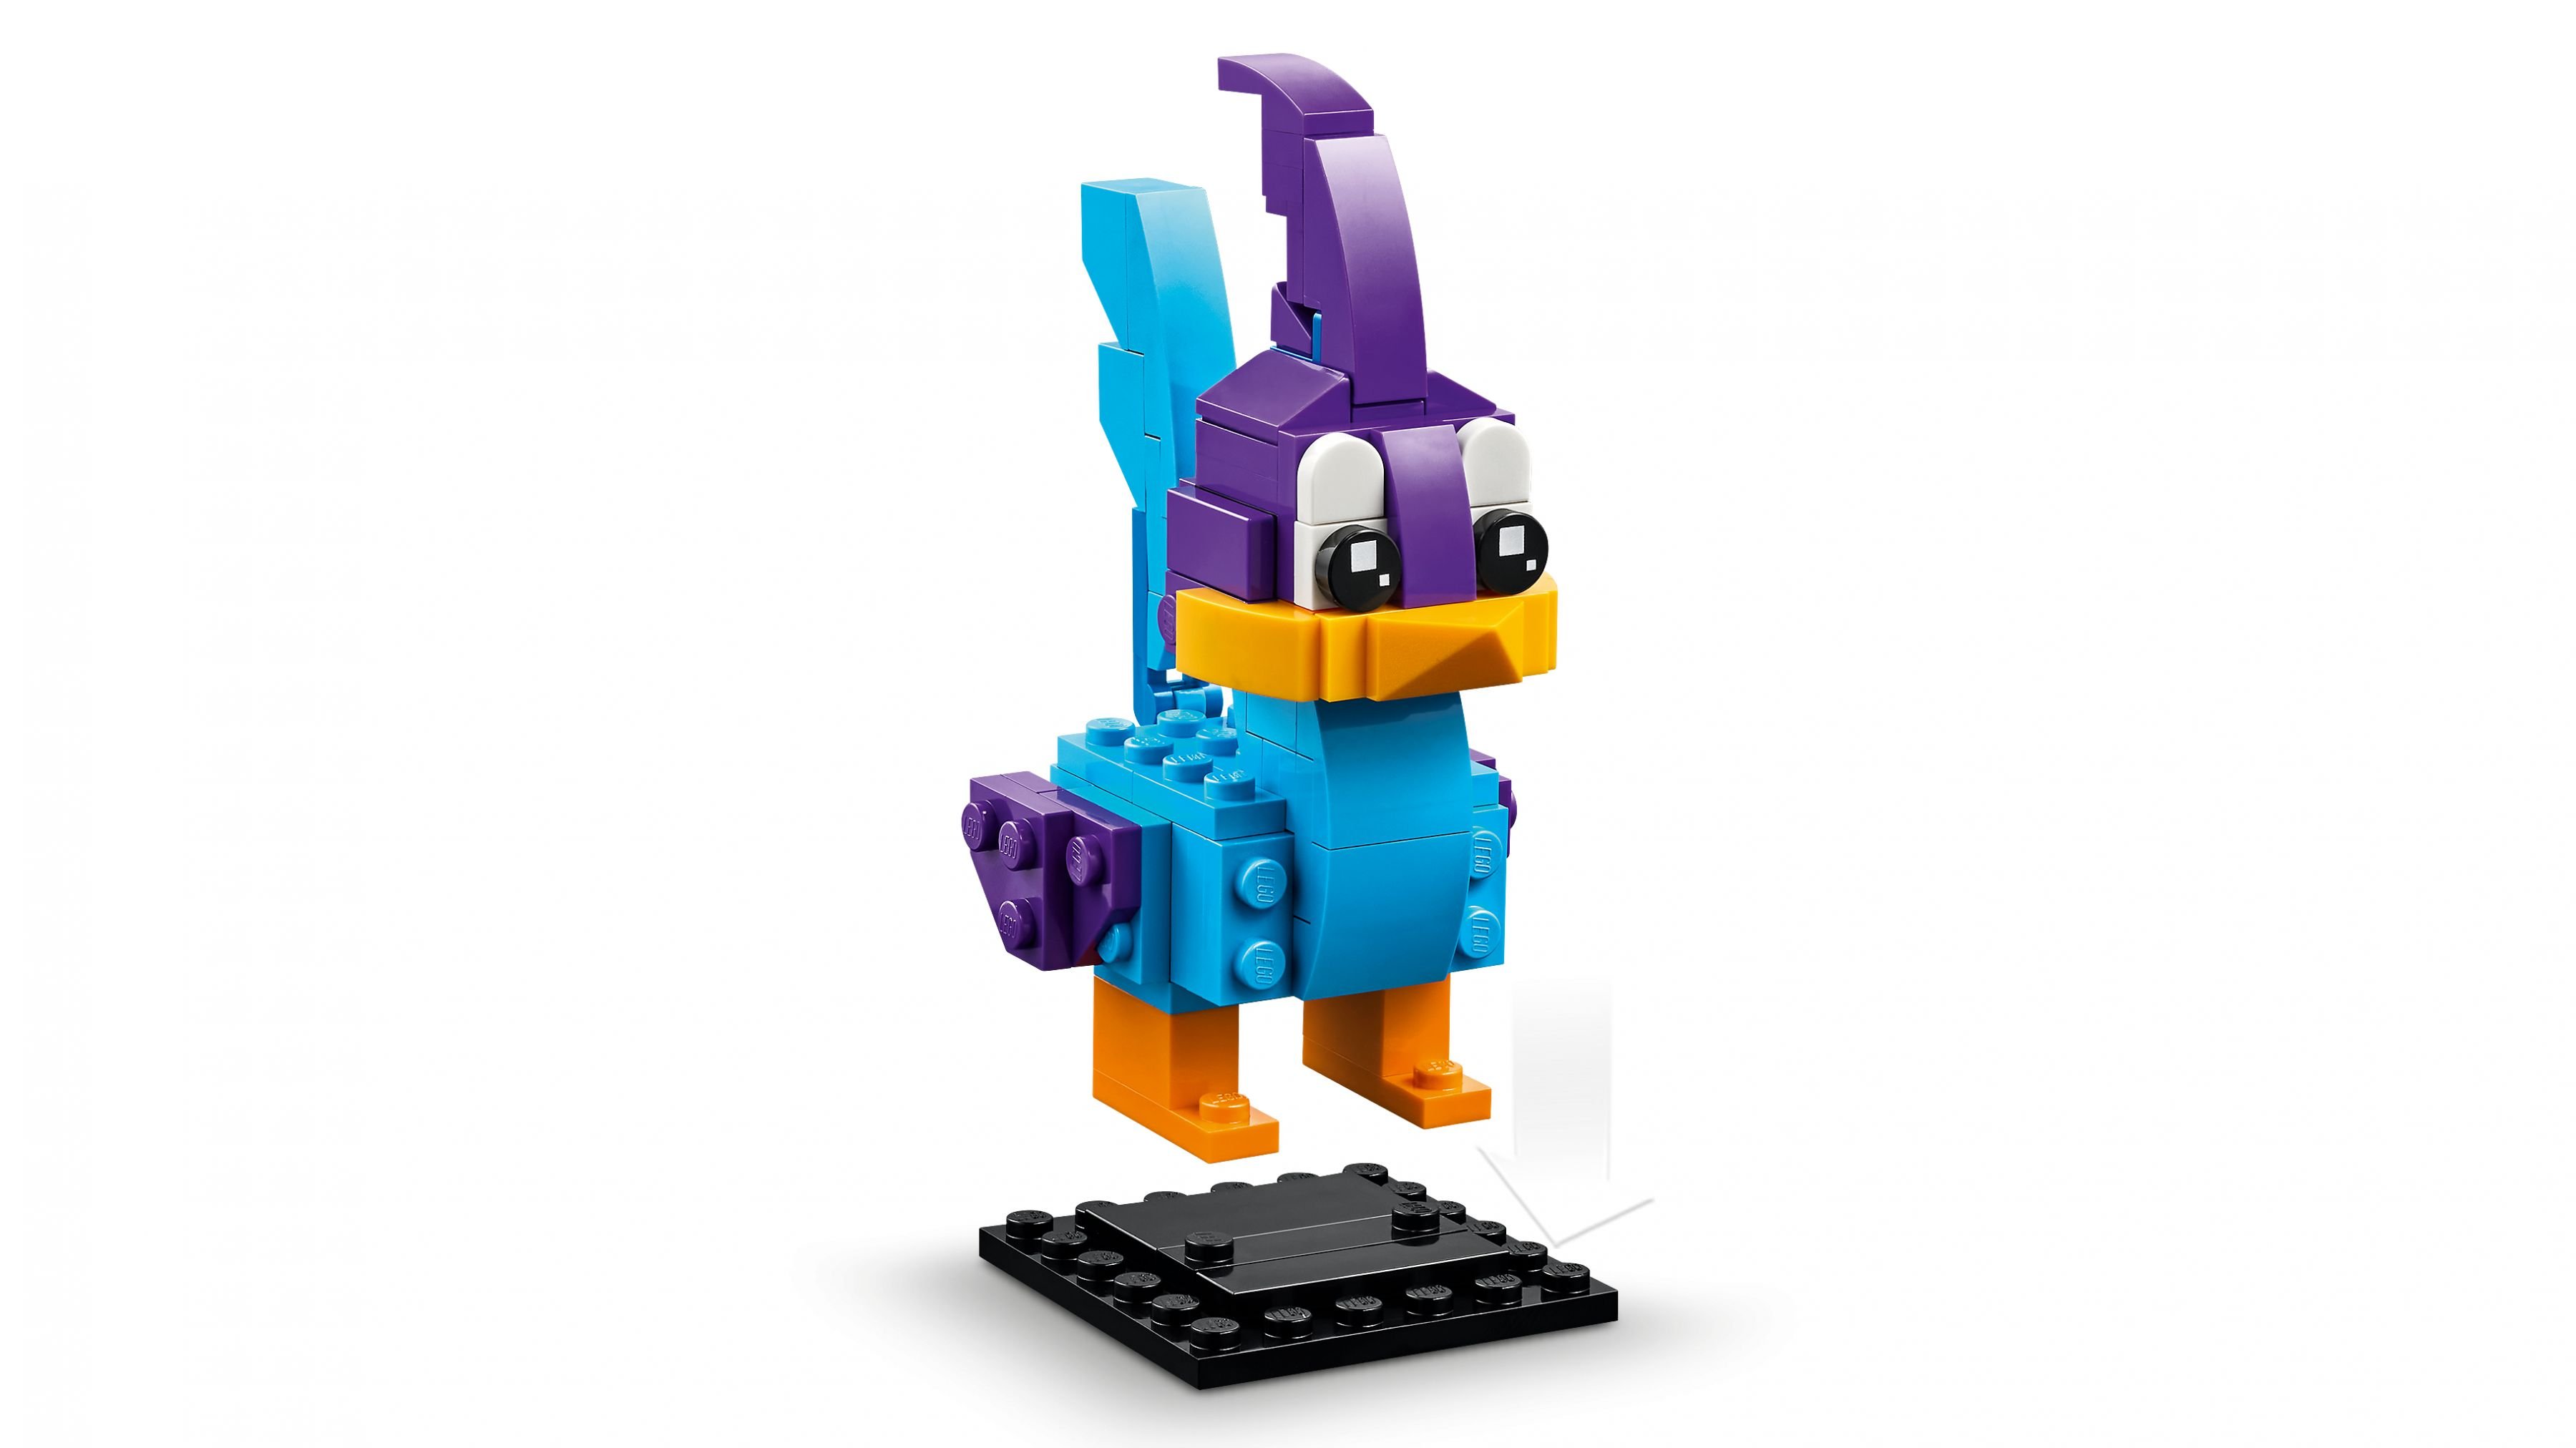 LEGO BrickHeadz 40559 Road Runner & Wile E. Coyote LEGO_40559_WEB_SEC03_NOBG.jpg